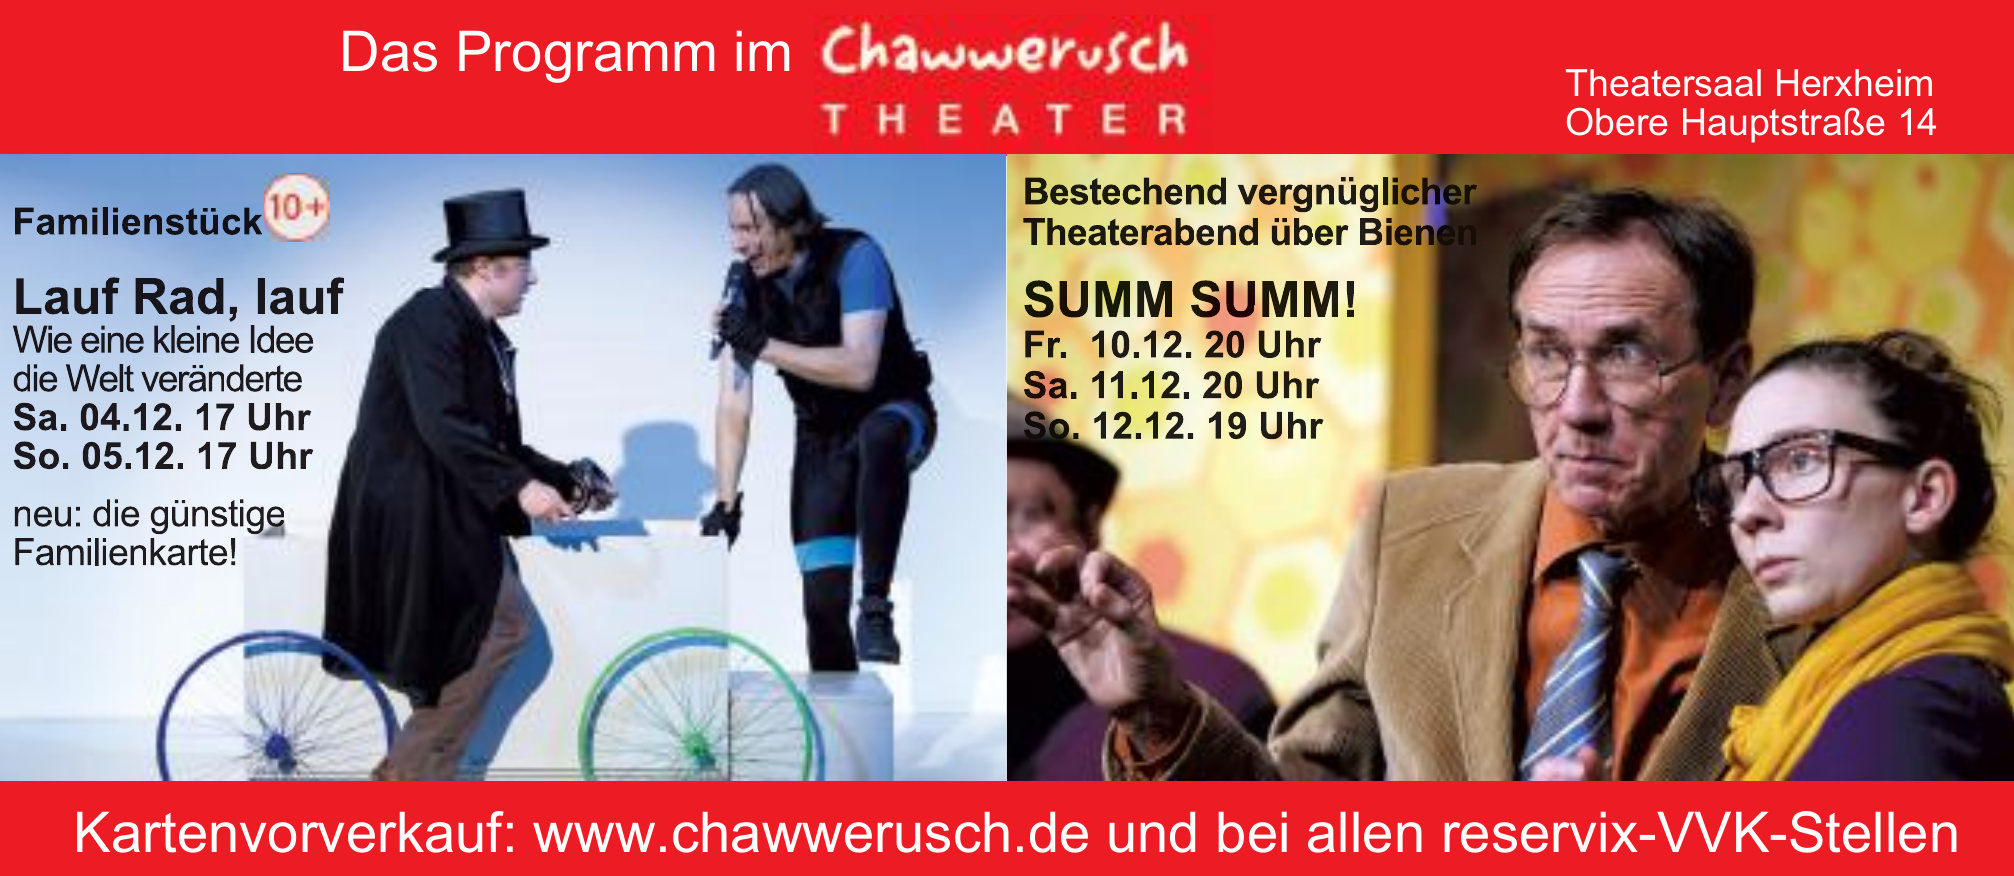 Chawwerusch Theater - Theatersaal Herxheim